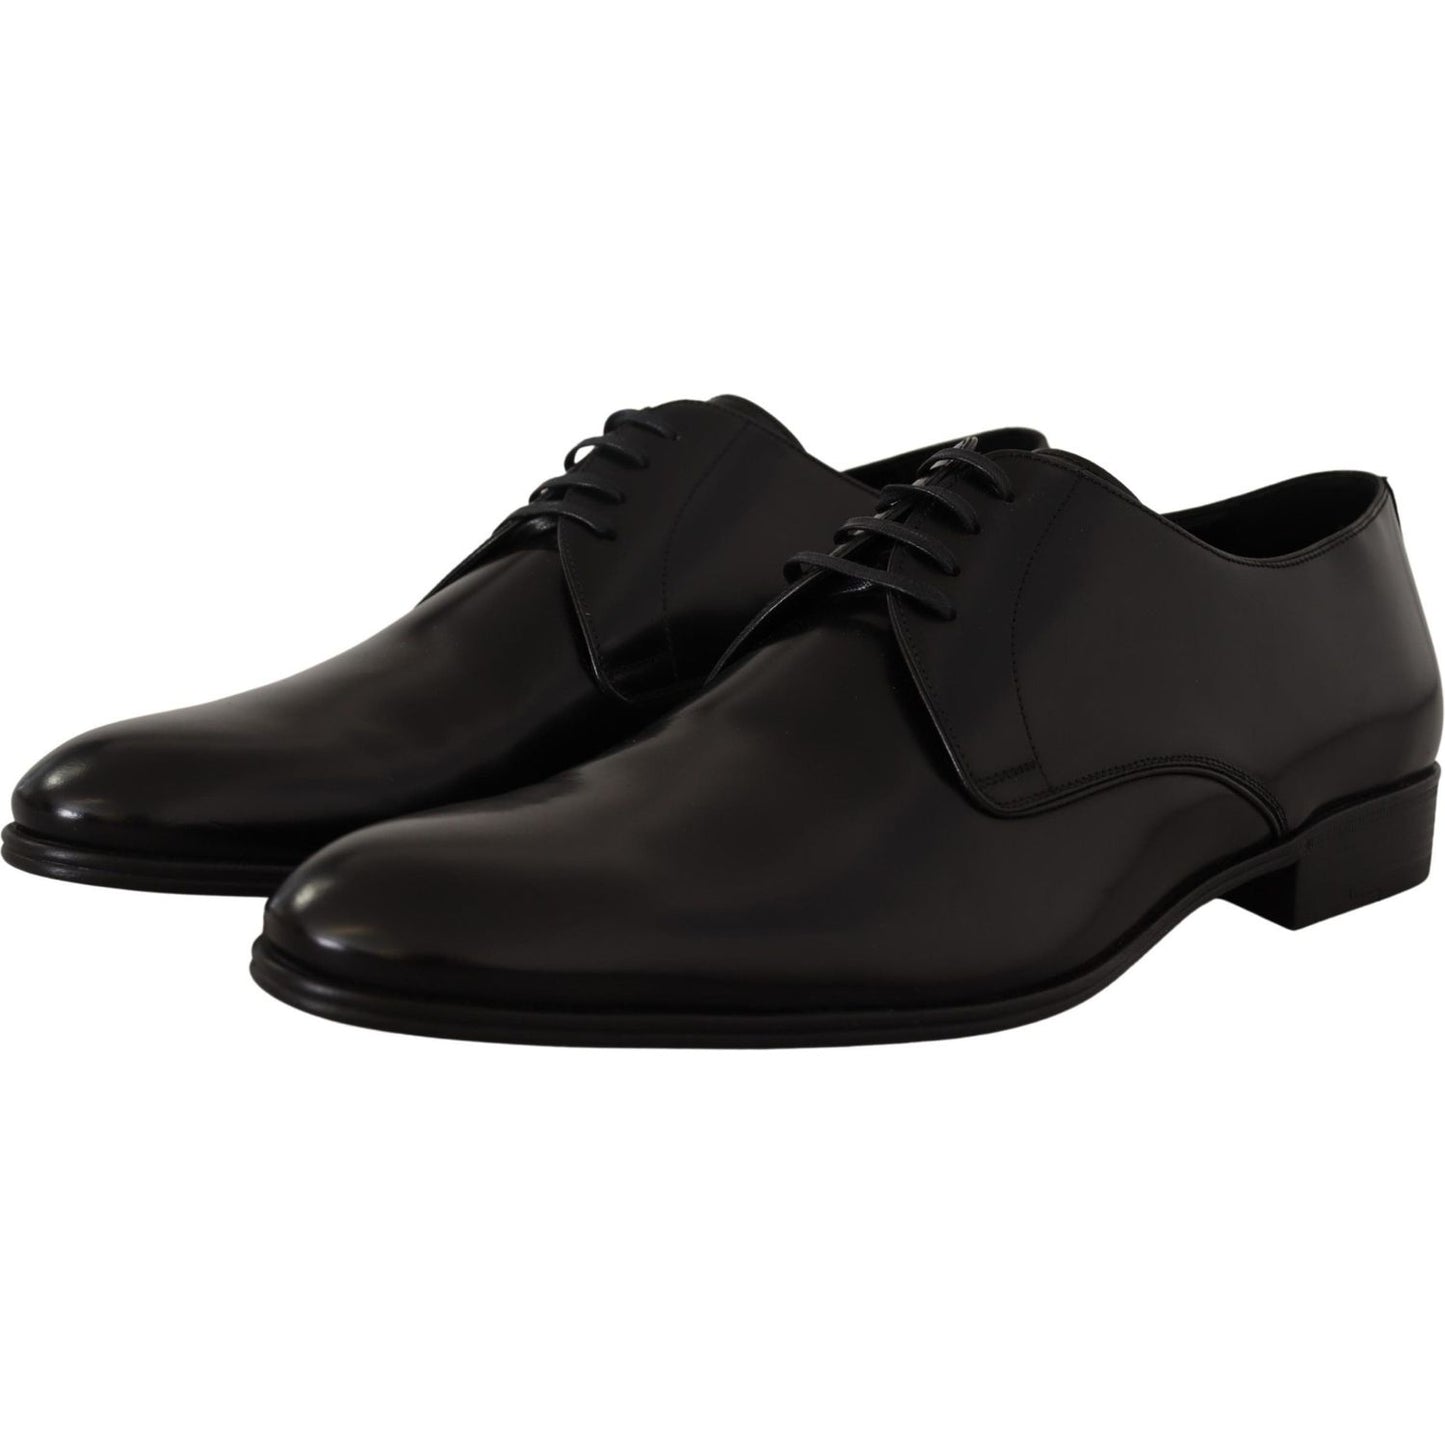 Dolce & Gabbana Elegant Black Leather Derby Shoes black-leather-lace-up-formal-derby-shoes